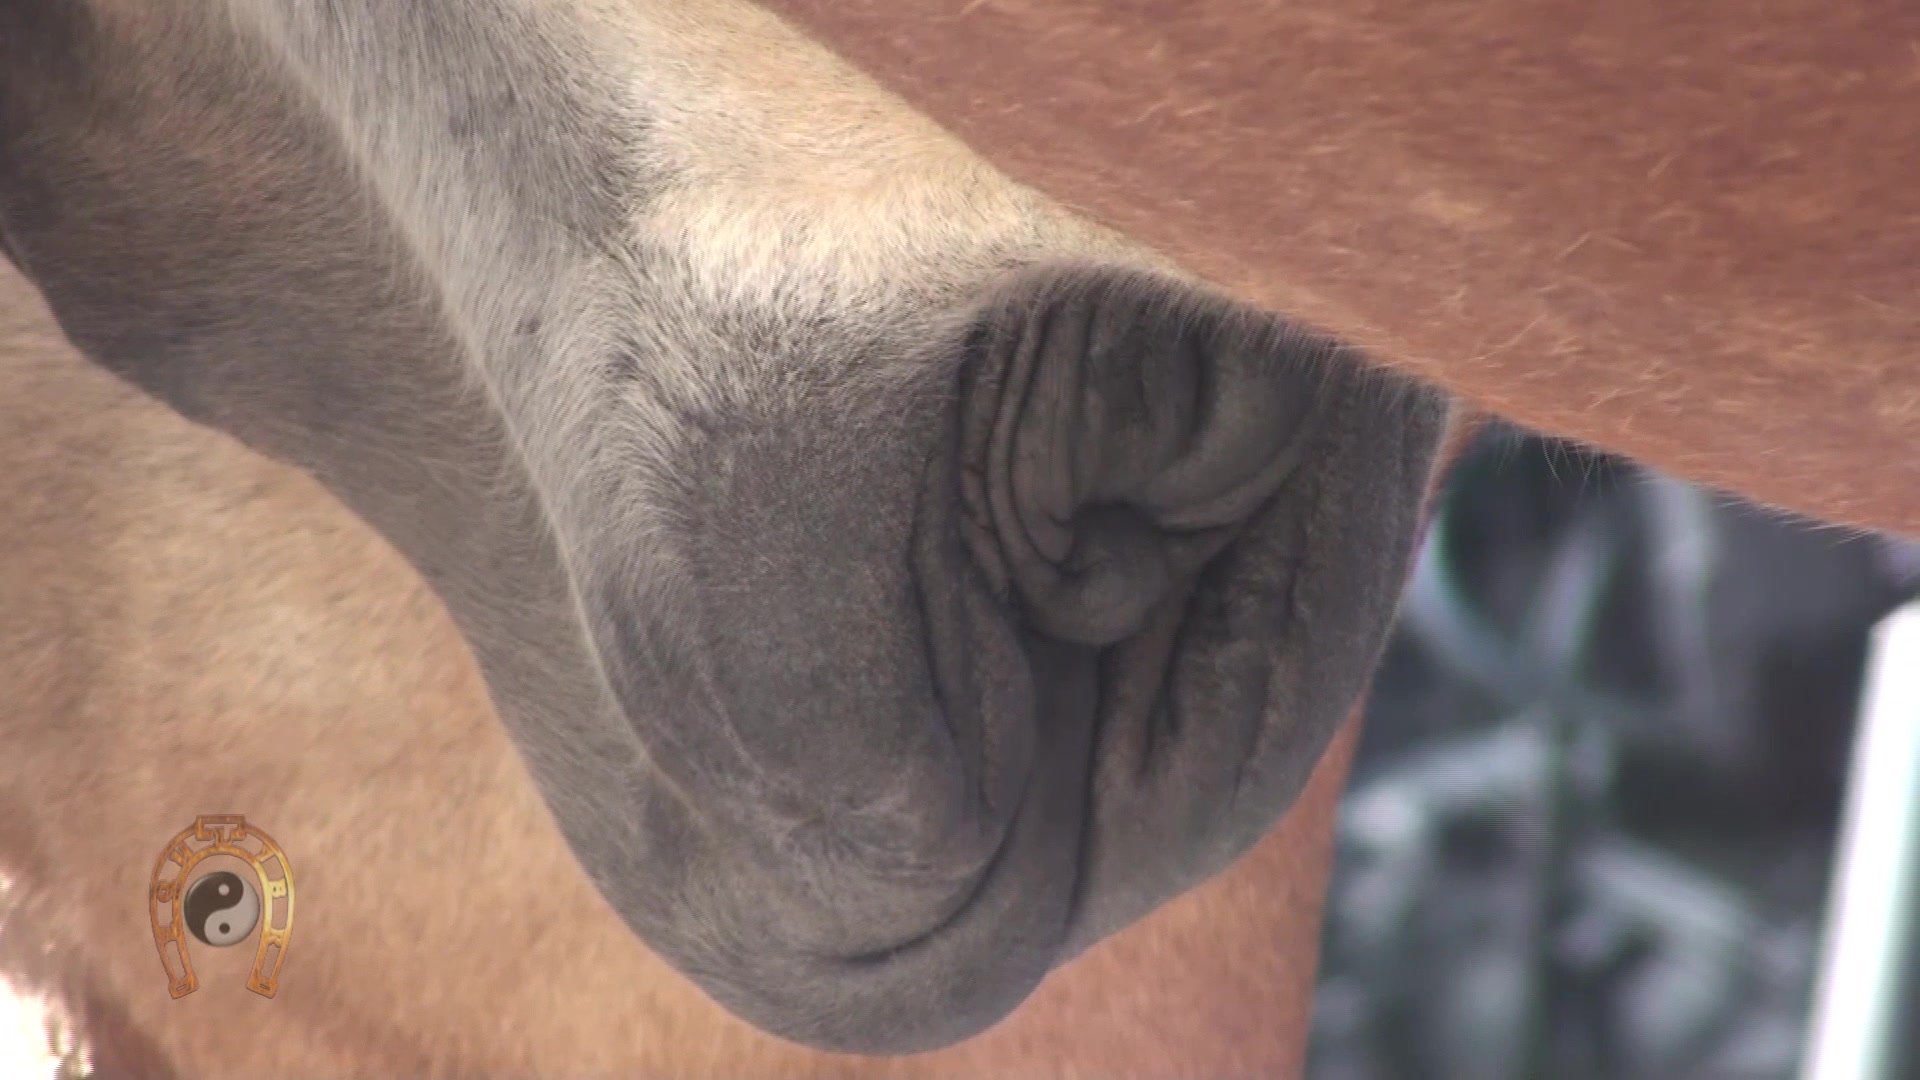 Horse genitalia showcased up close in a zoo porn vid